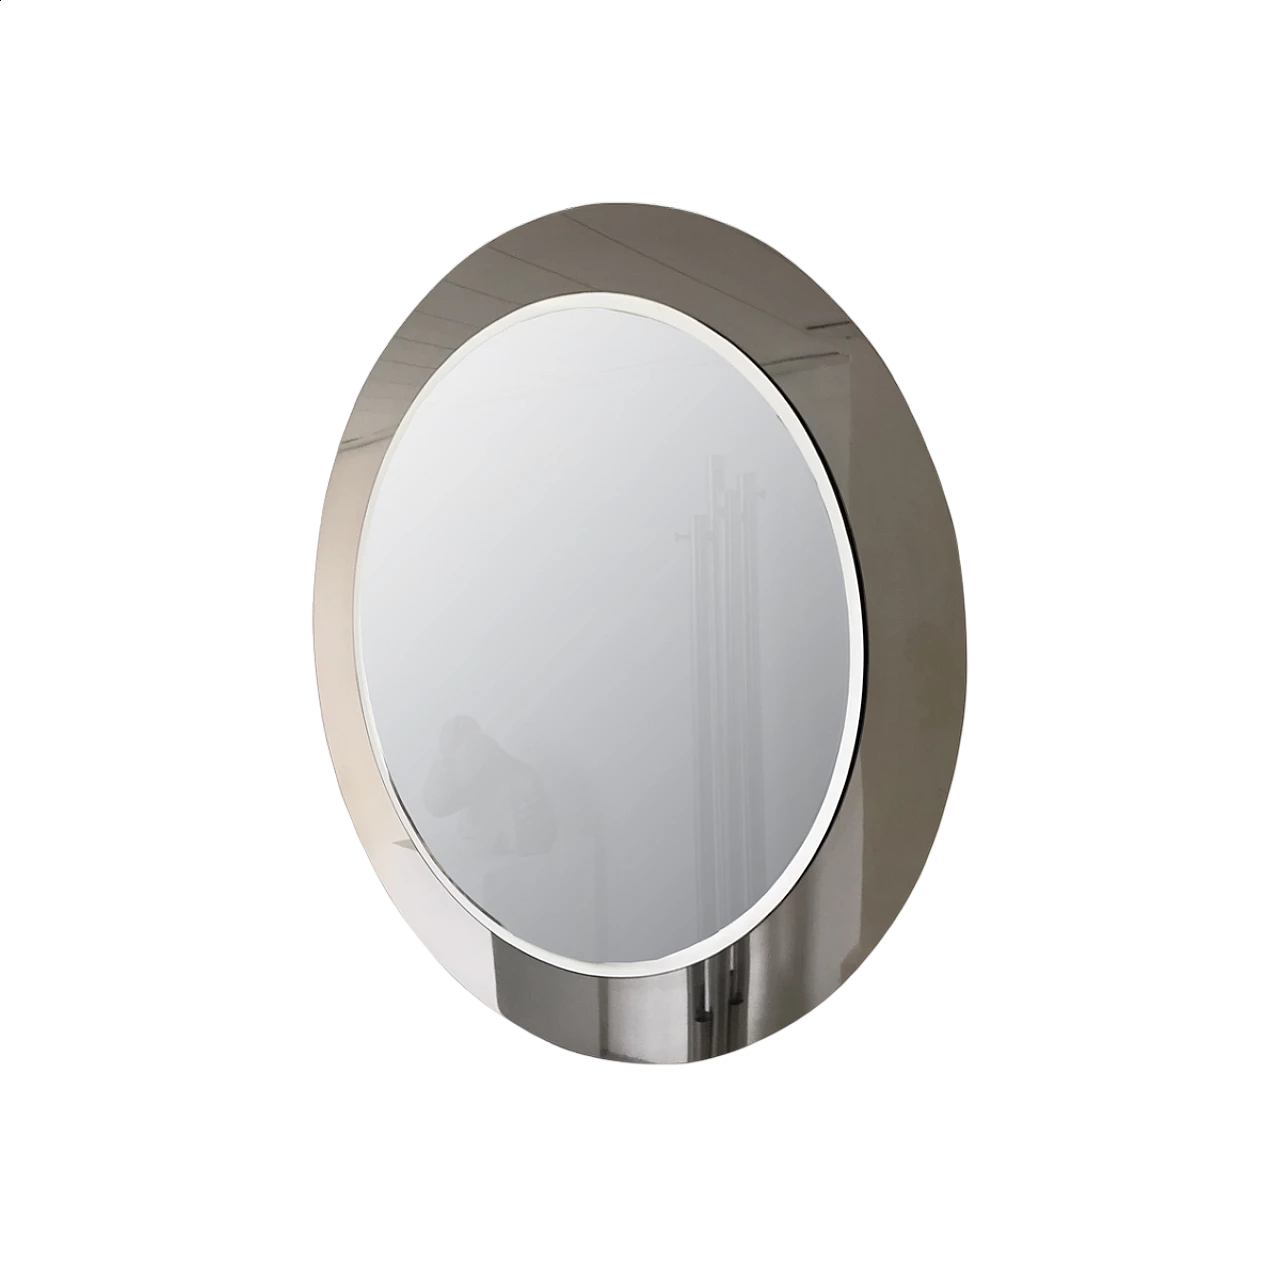 Circular mirror with metal frame, 1960s 1060299